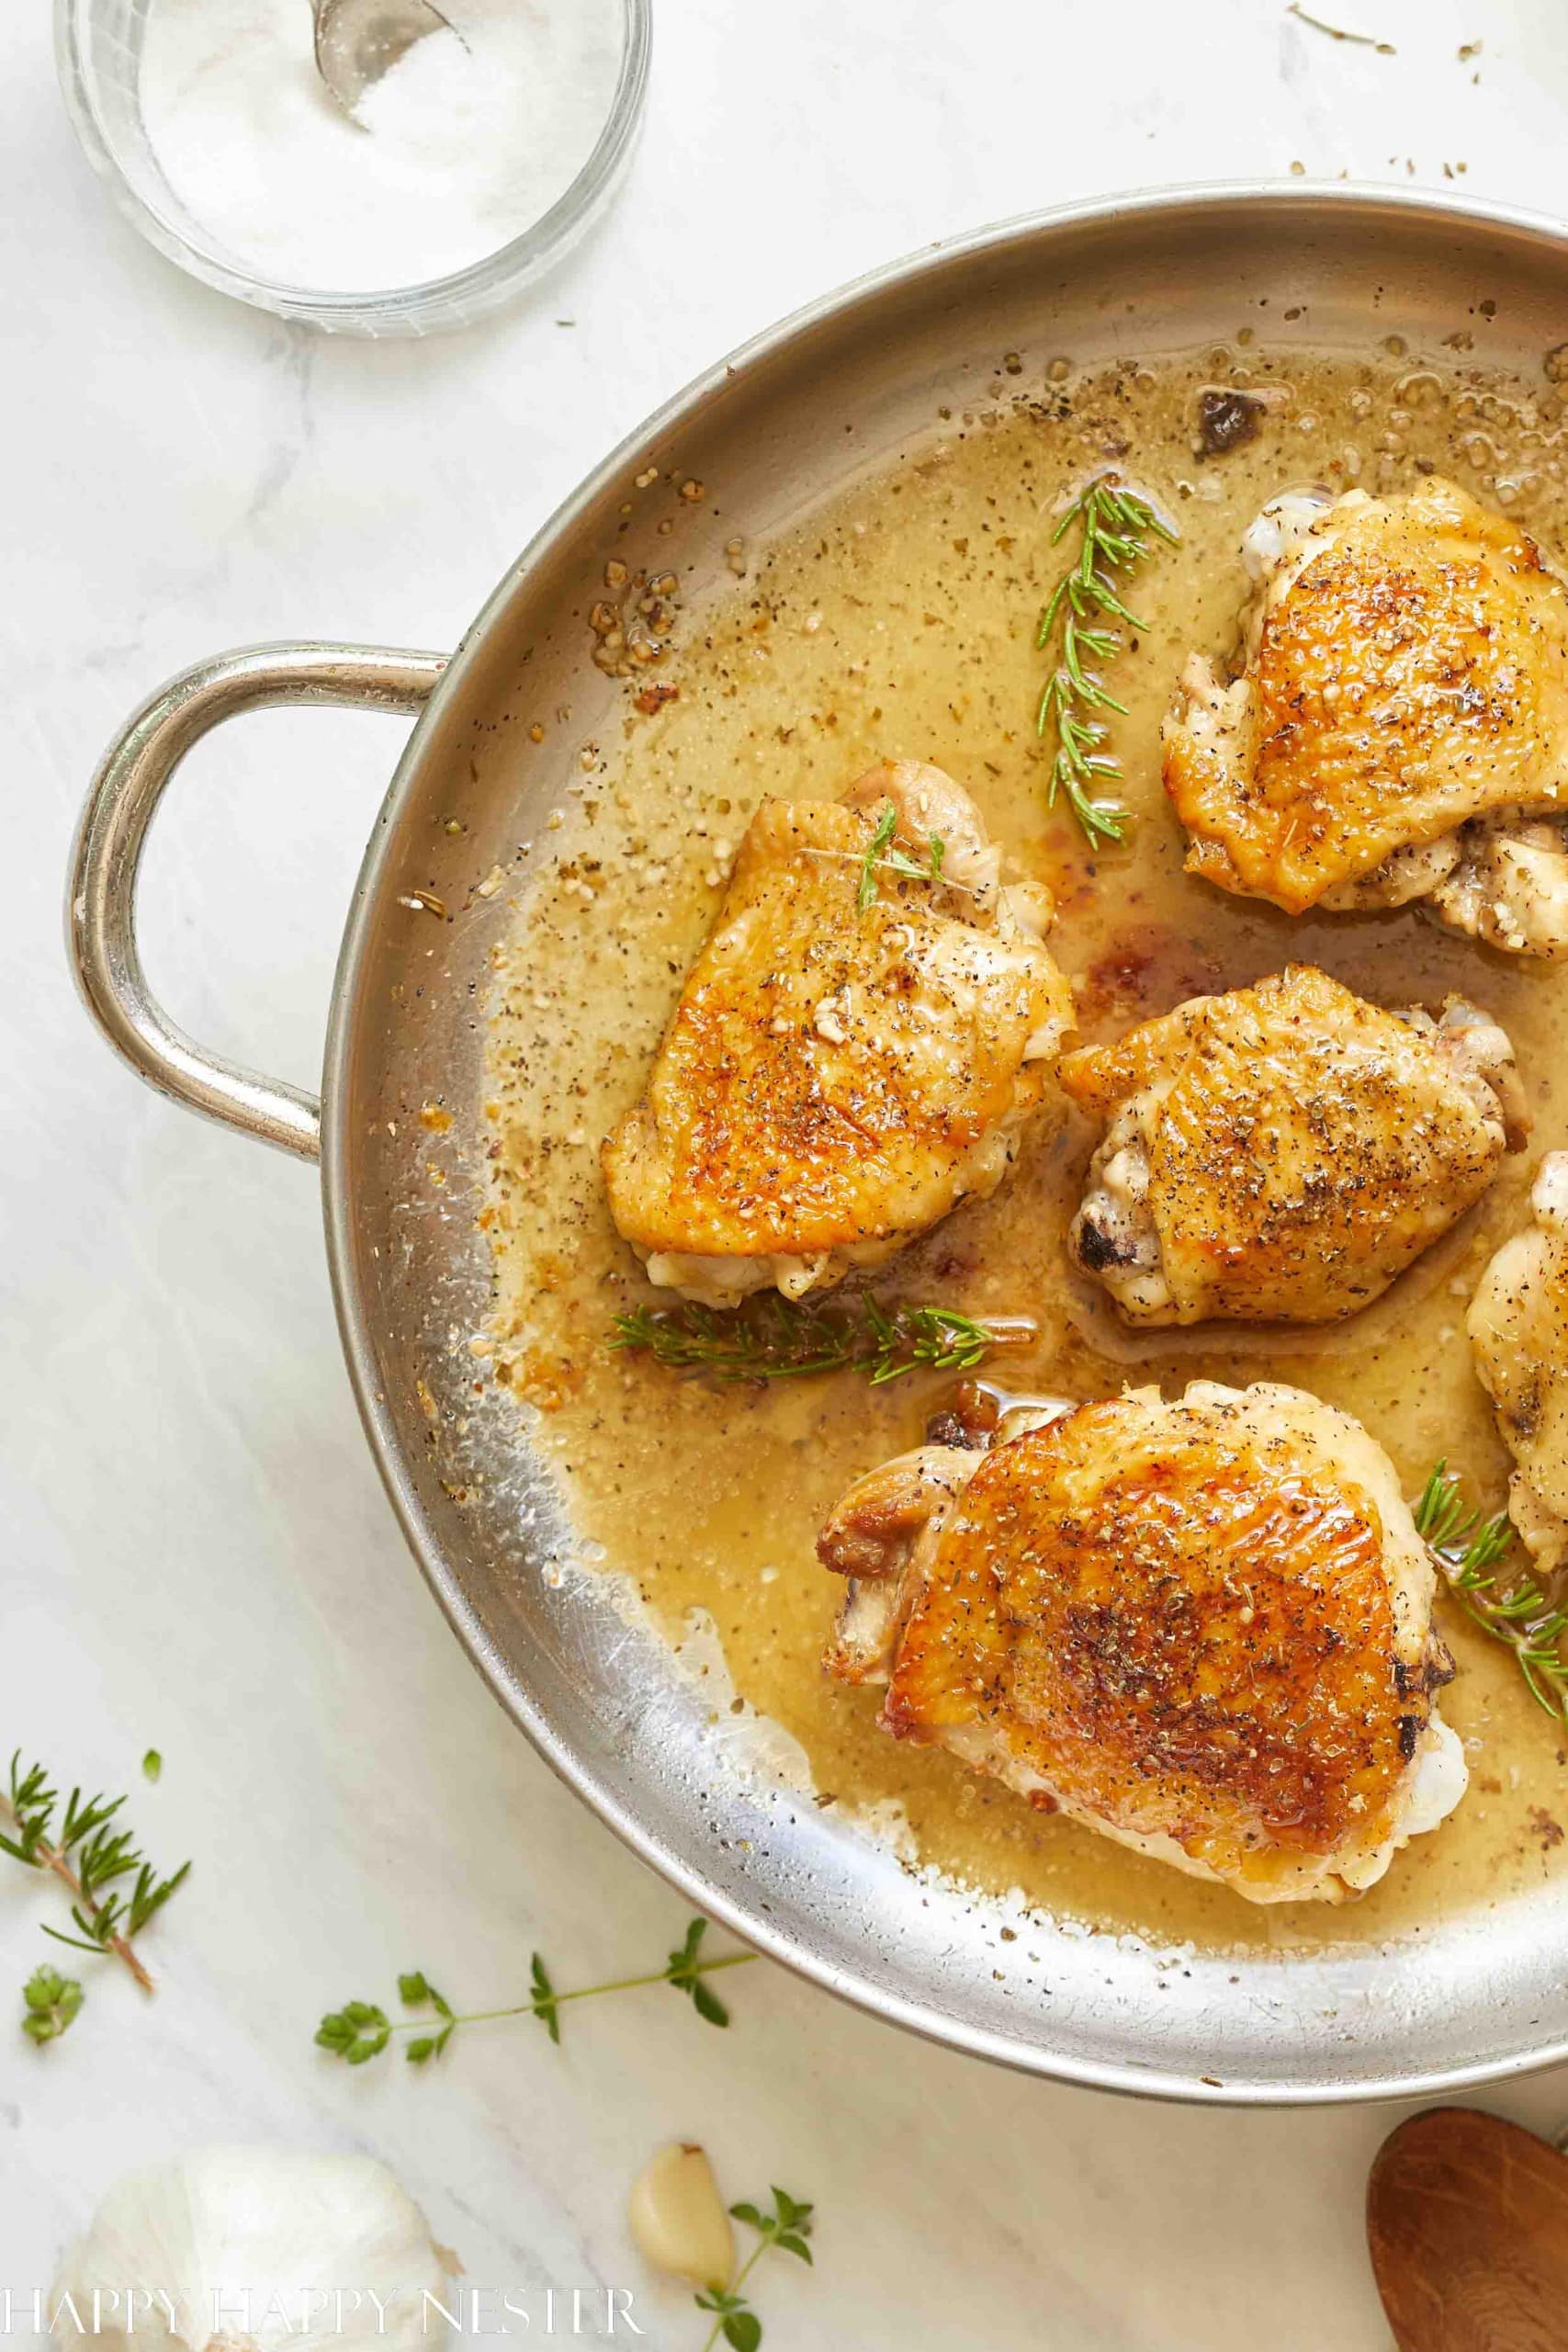 https://happyhappynester.com/wp-content/uploads/2022/08/chicken-dinner-recipe-scaled.jpg